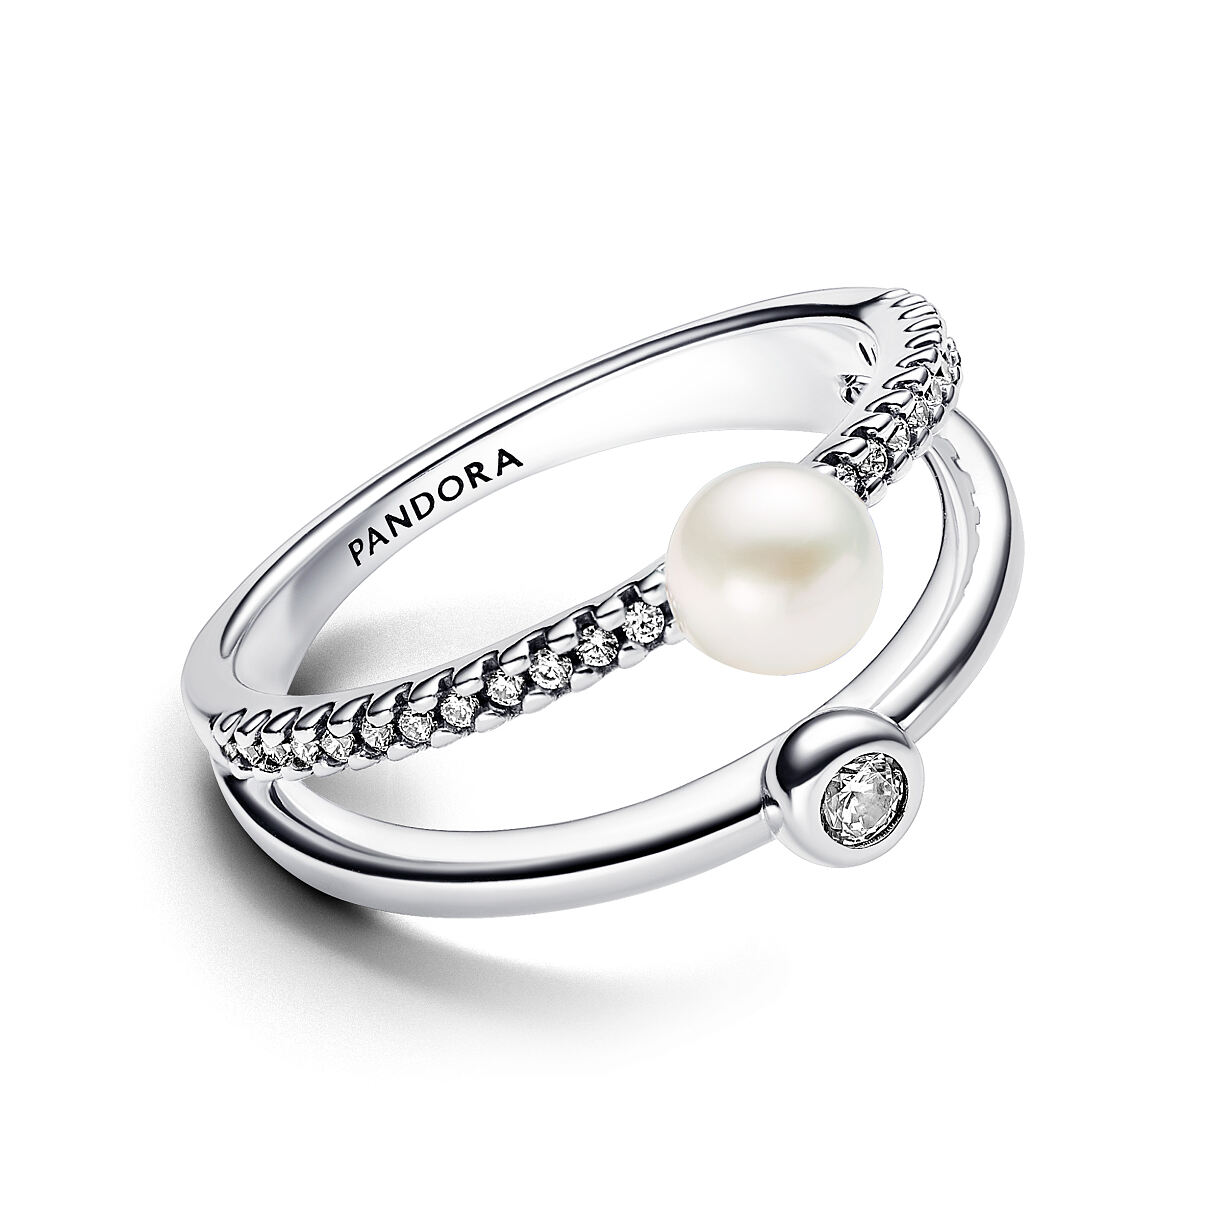 Pandora_Ring_Sterling Silver_Freshwater Pearls_Cubic Zirconia_193147C01_99,00 Euro (3)